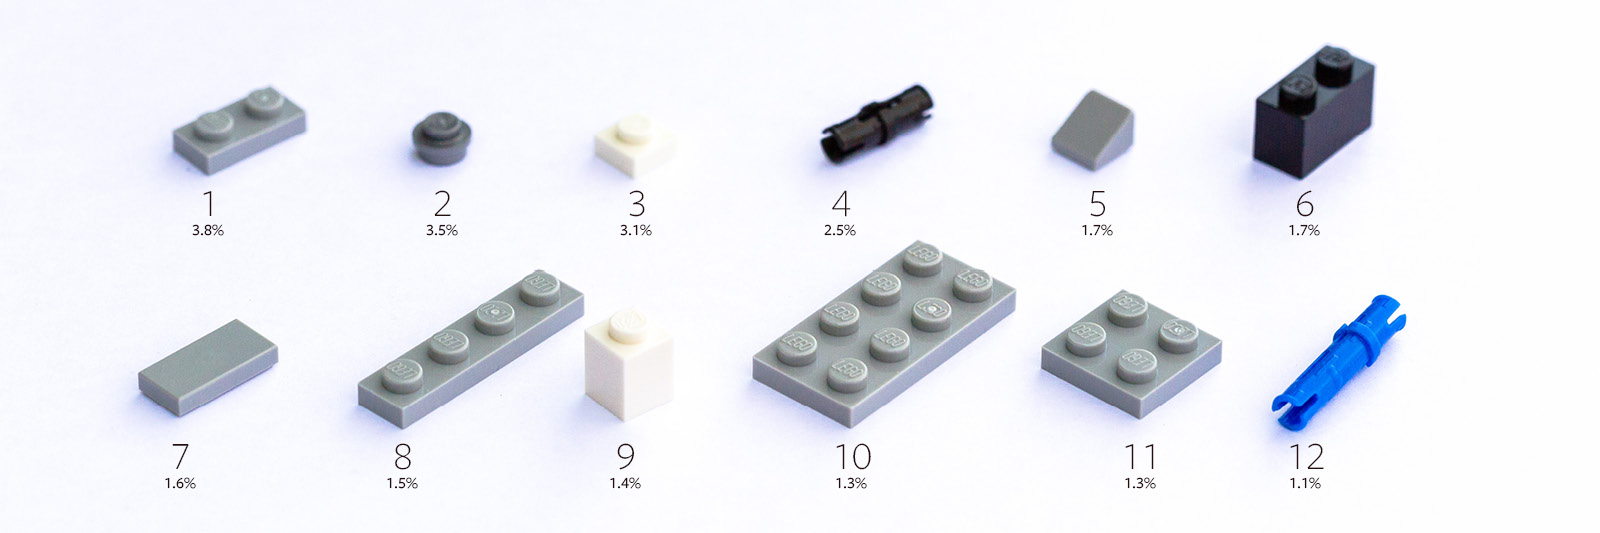 LEGO LOT OF 50 NEW DARK 2 X 4 DOT BRICKS BUILDING BLOCKS PIECES 